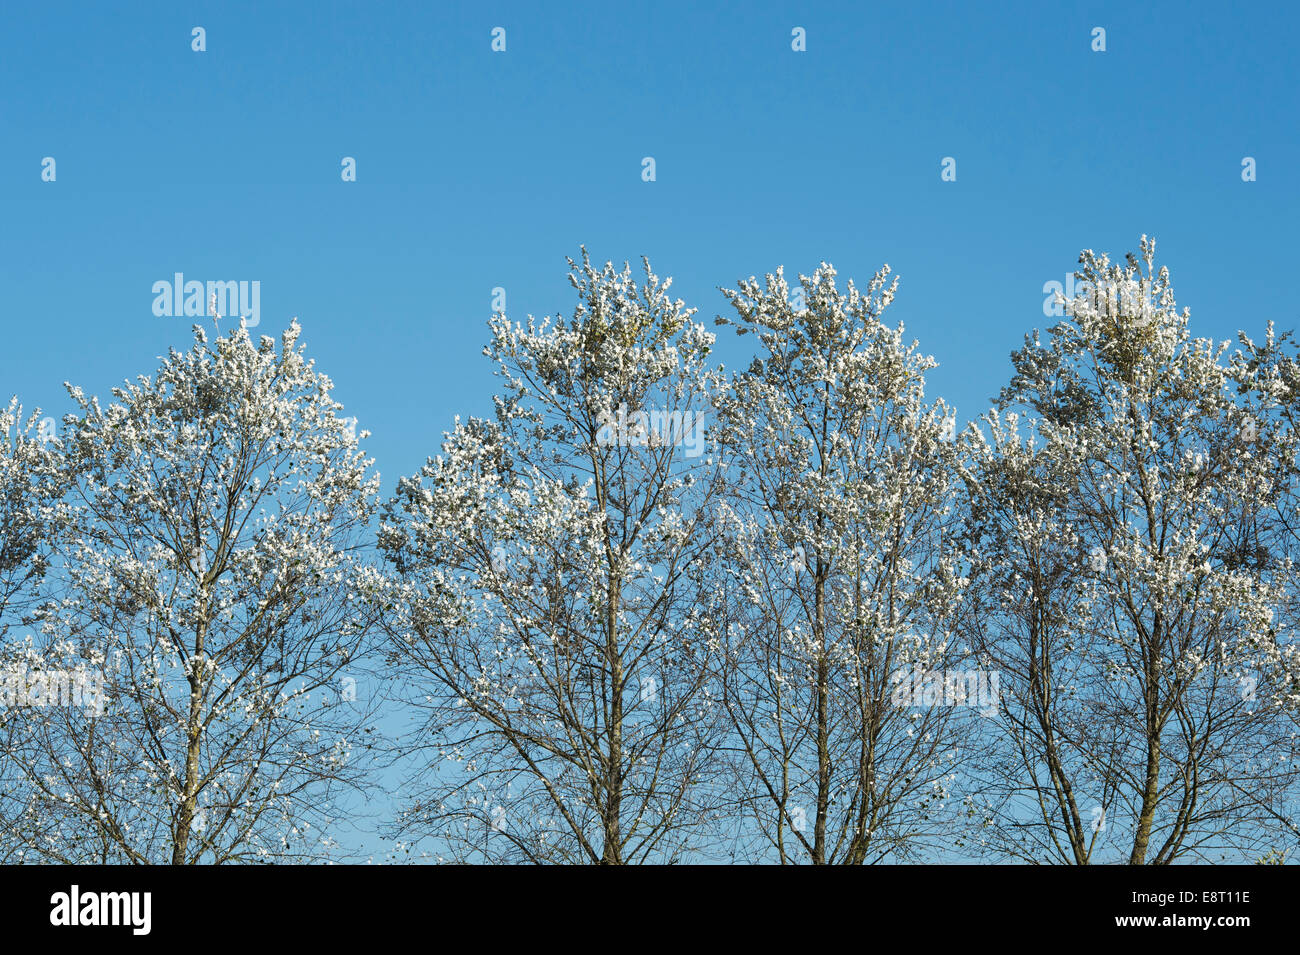 Populus alba. Silver poplar trees against blue sky Stock Photo